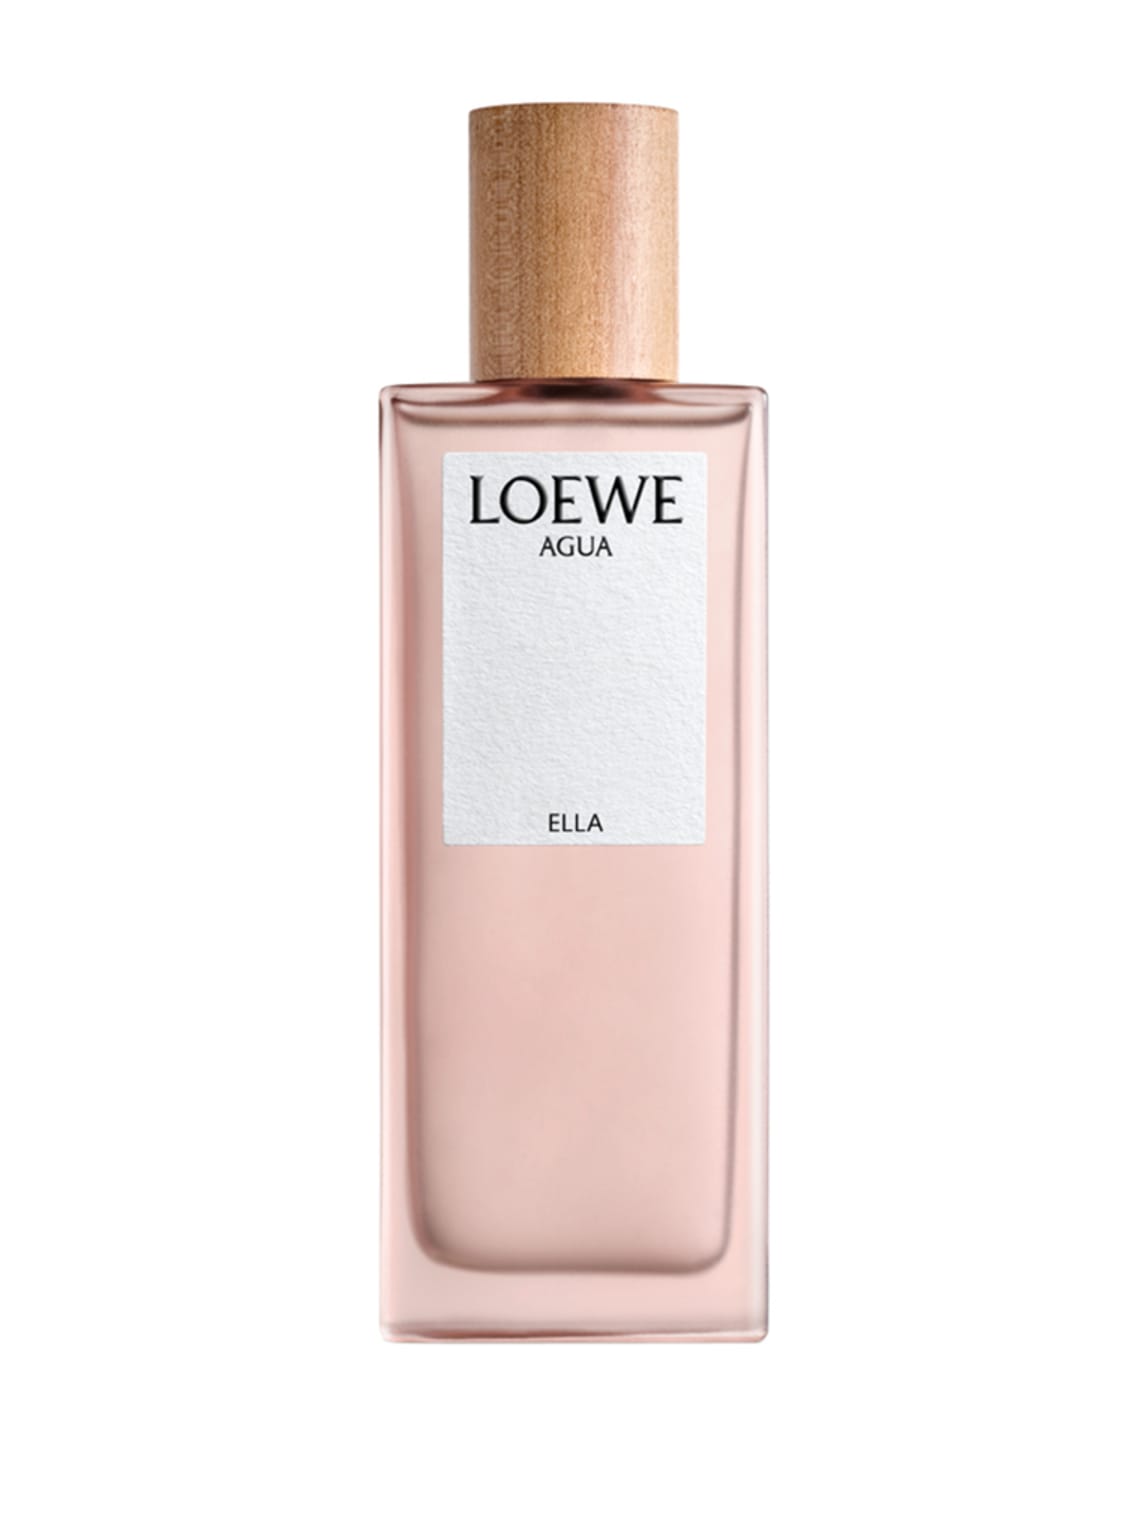 Loewe Agua Ella Eau de Toilette 100 ml von Loewe